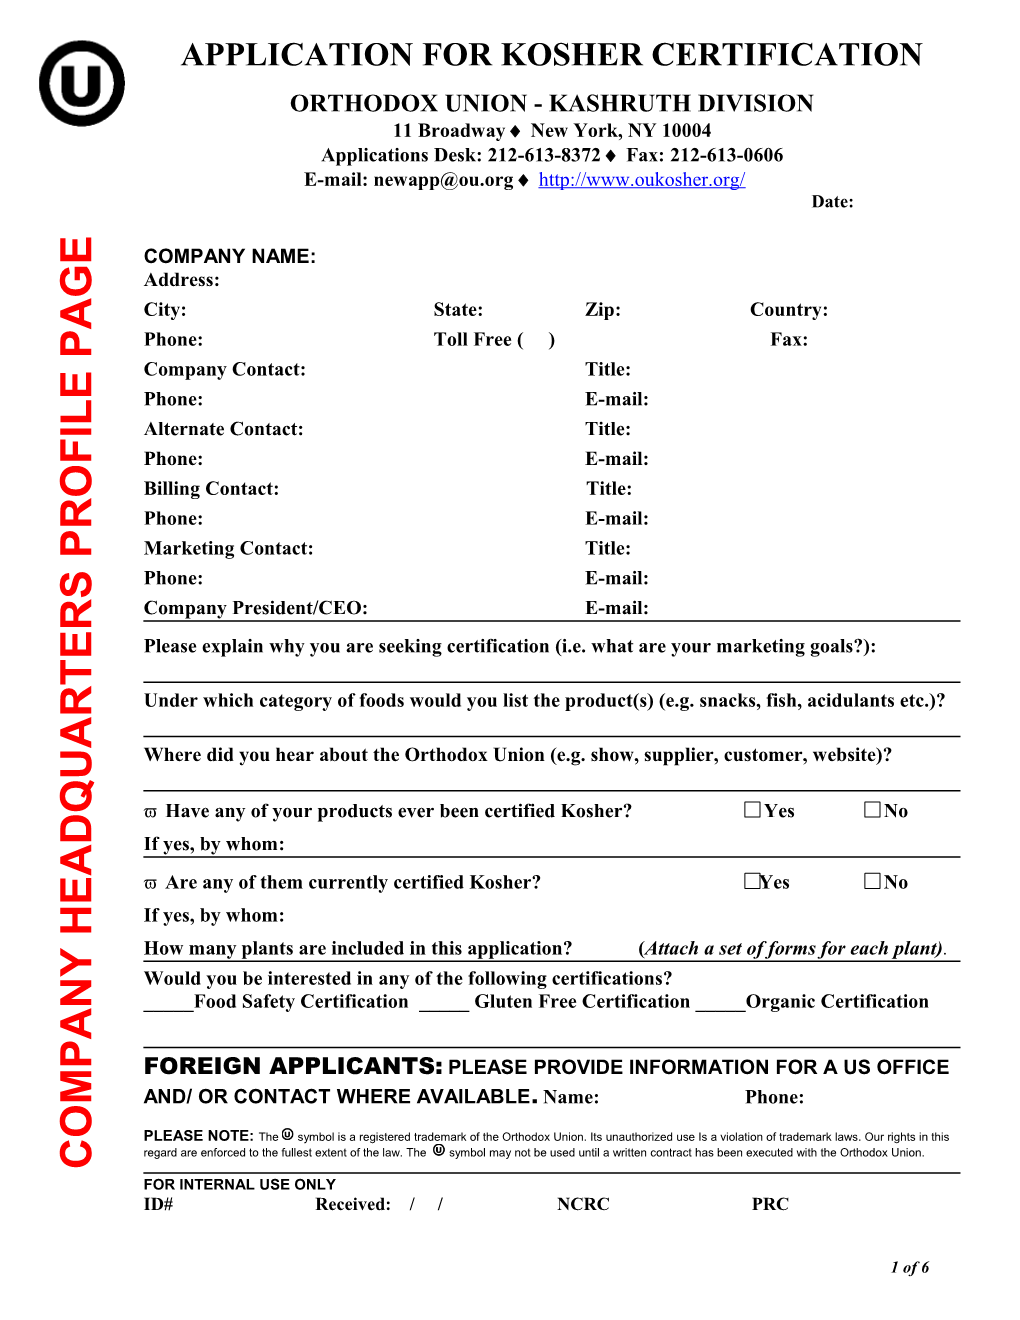 Application for Kosher Certification